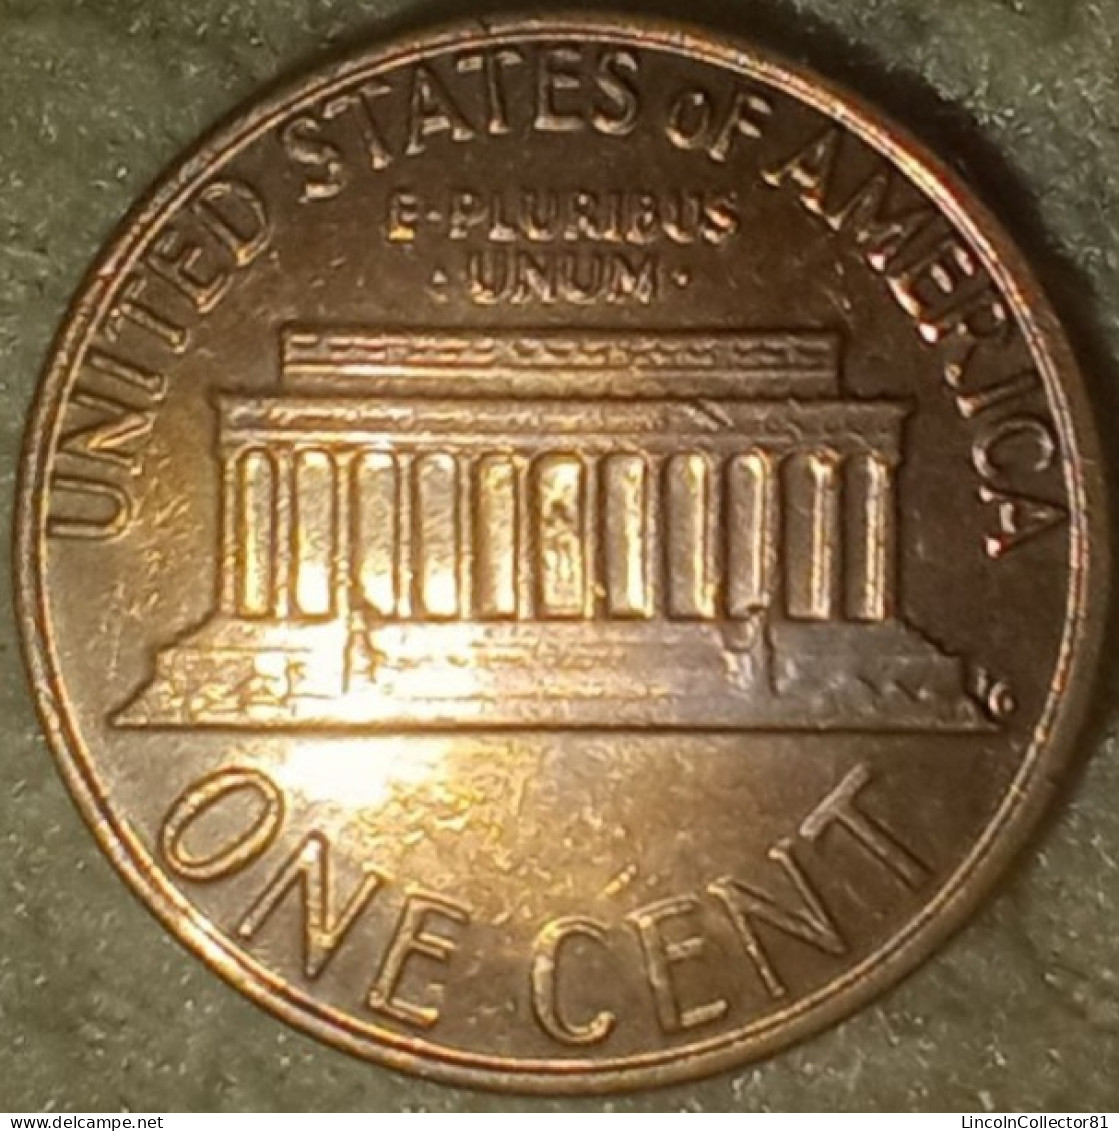 1980 D Lincoln Memorial Penny DDO DDR RD